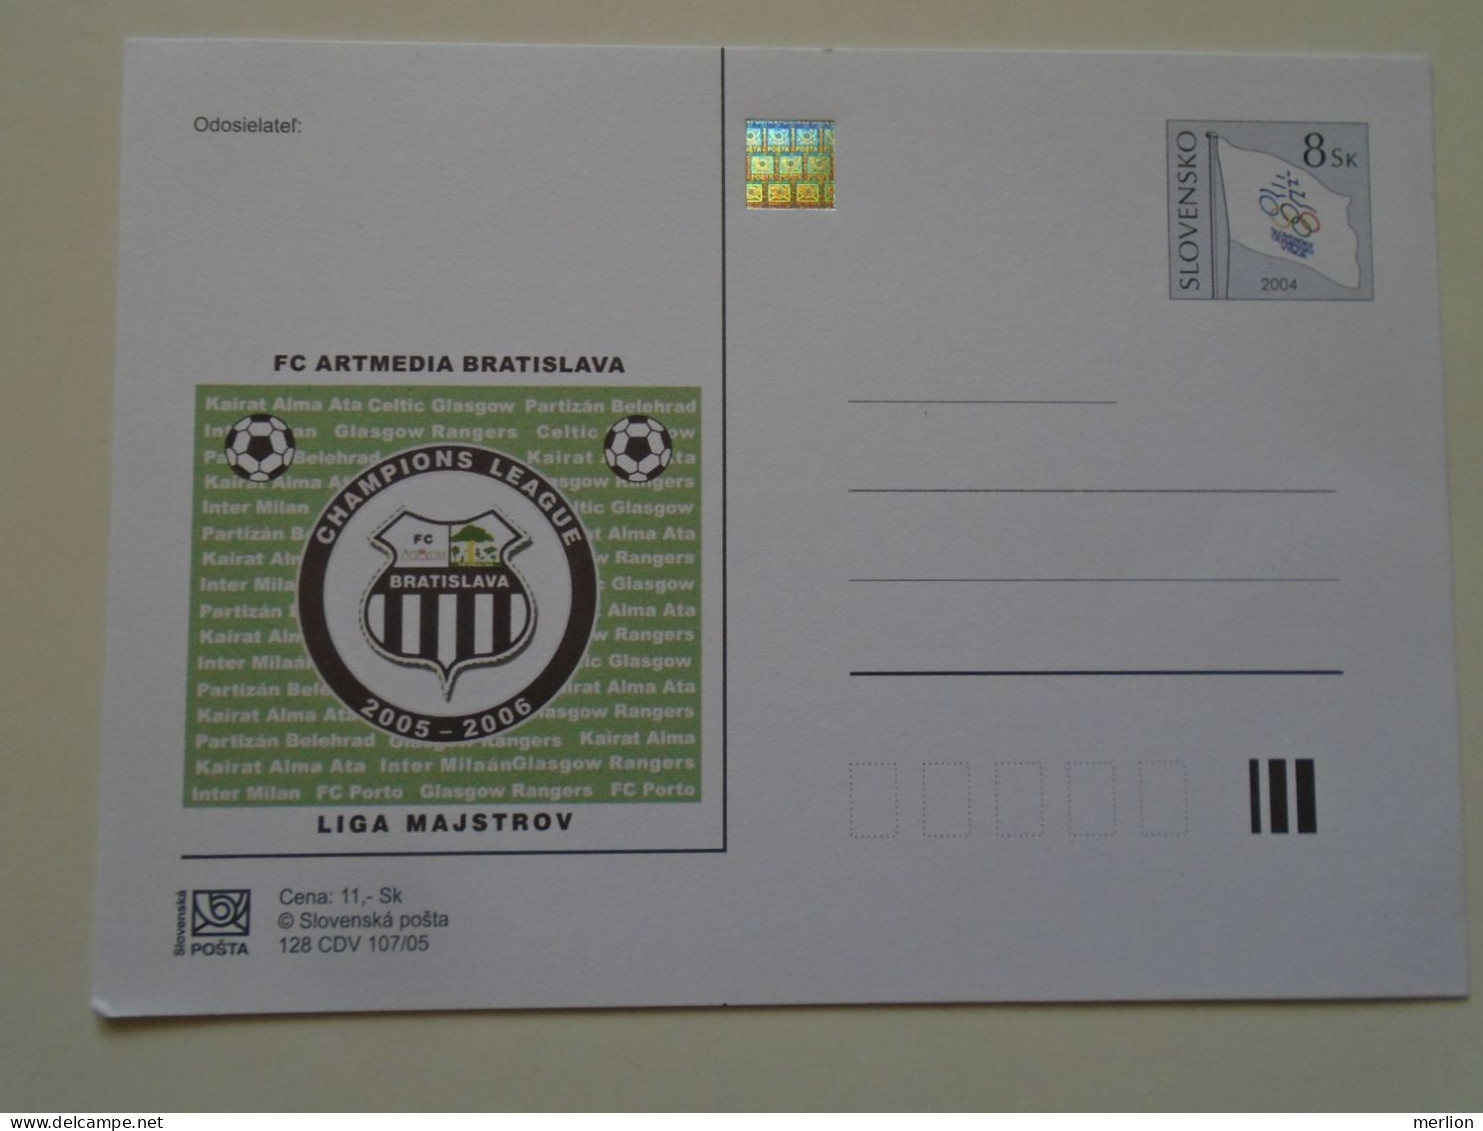 D196984    Slovensko   Slovakia   Bratislava 2004  Postal Stationery  FC Artmedia Bratislava - Champions League - Cartes Postales